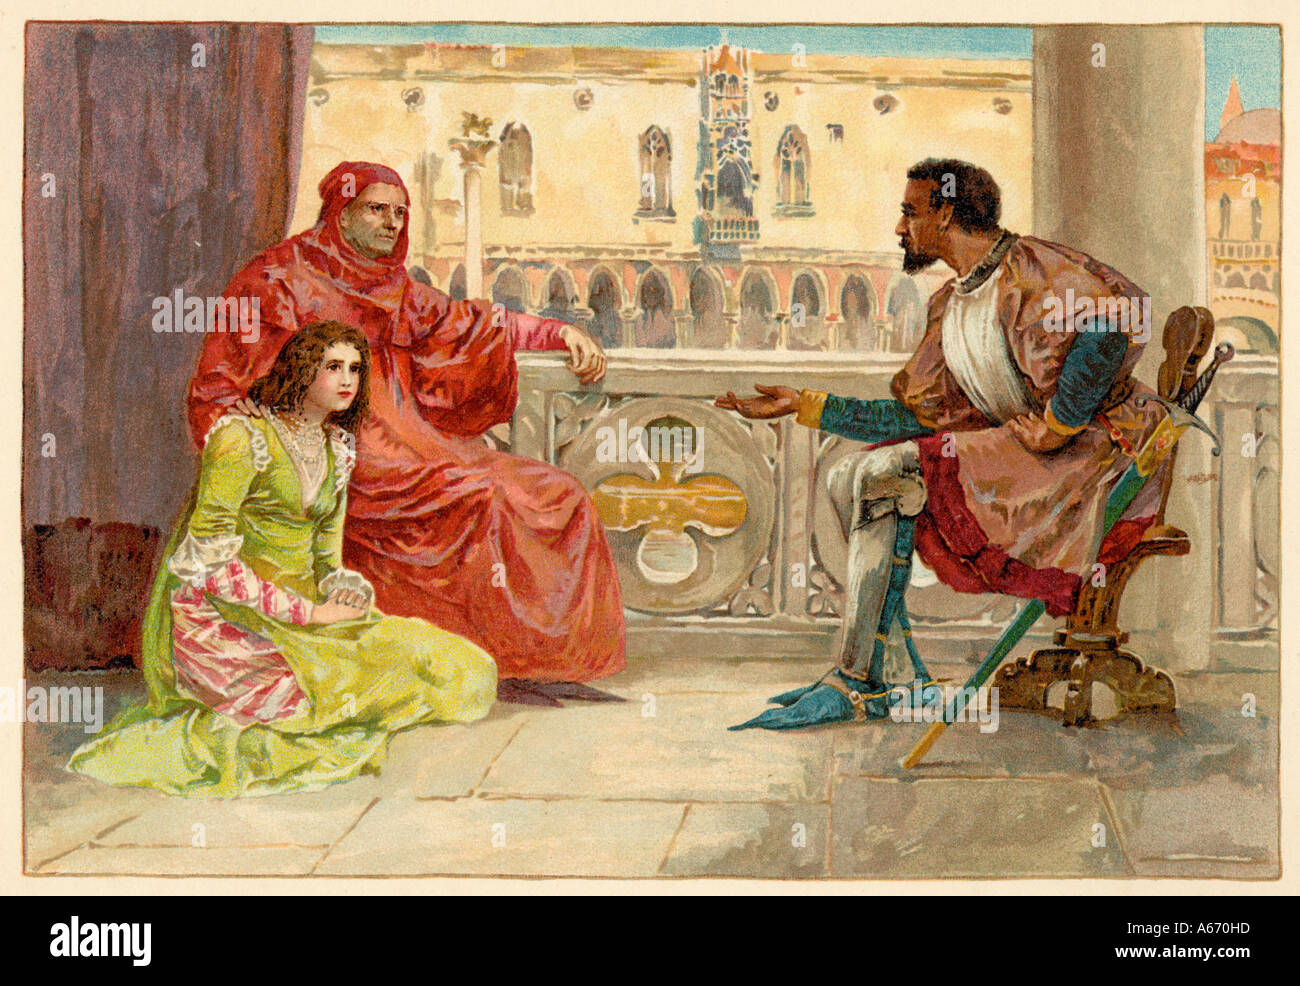 Othello Shakespeare Immagini e Fotos Stock - Alamy